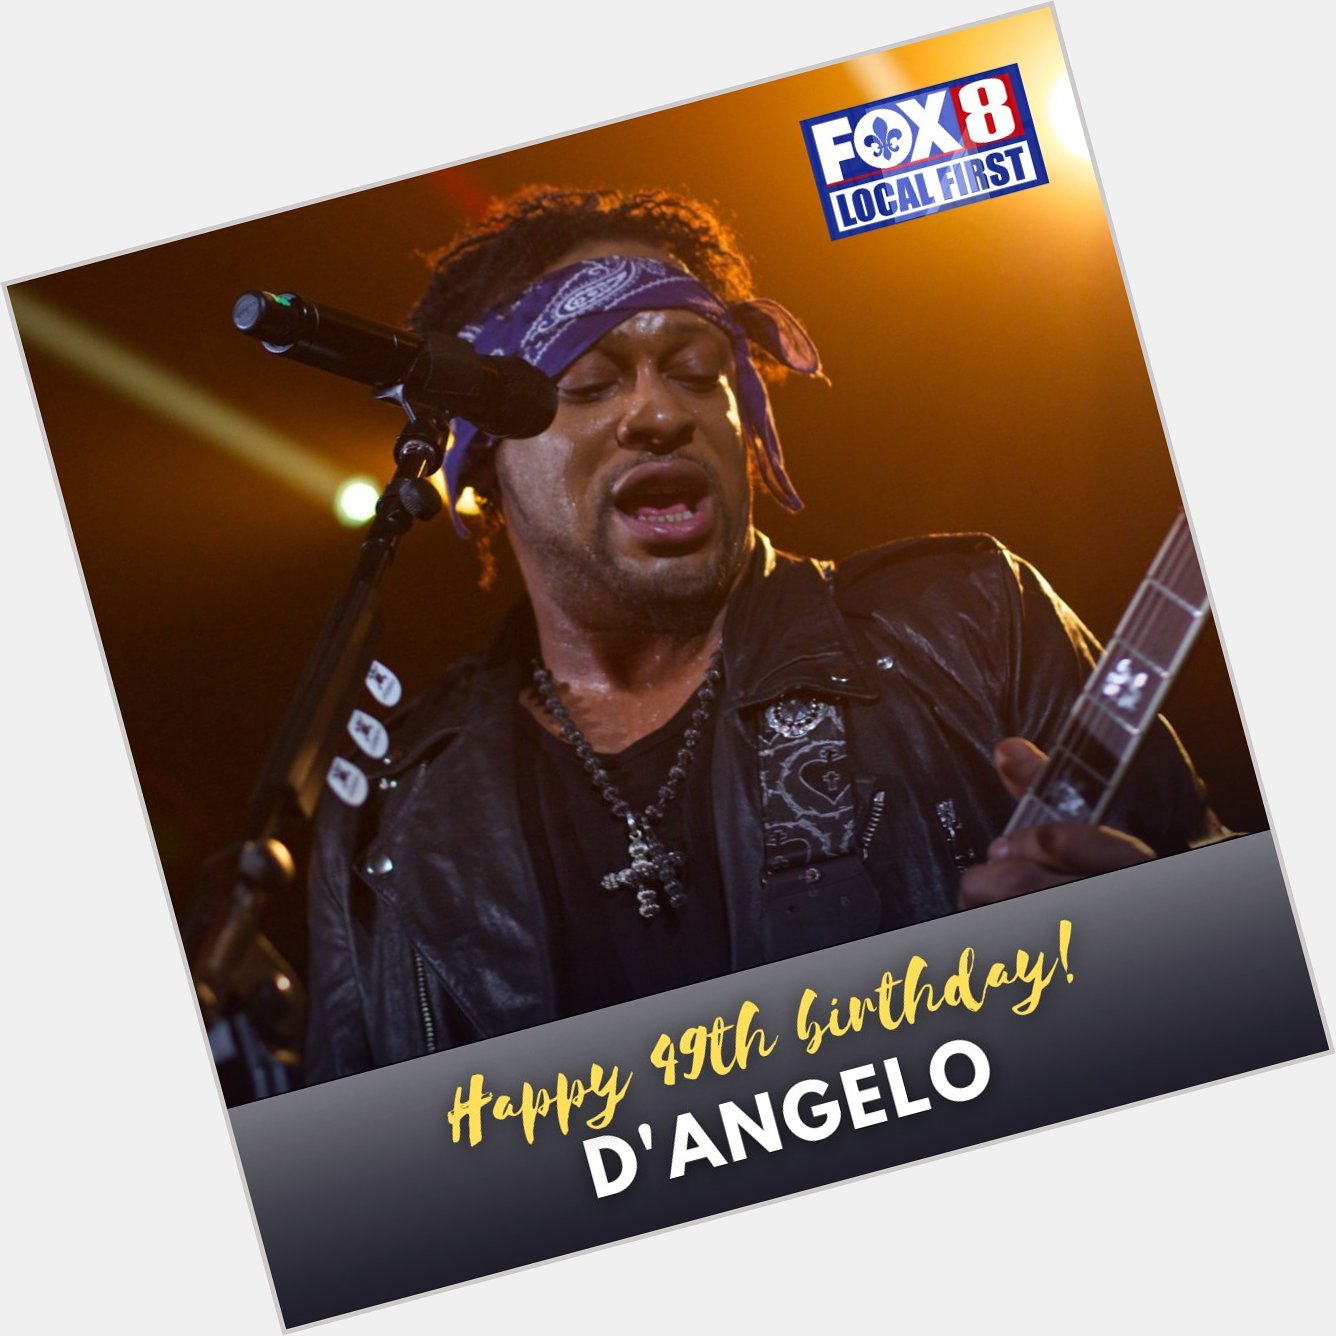 FOX8NOLA: Happy birthday to soul powerhouse D\Angelo, who turned 49 on Saturday! 